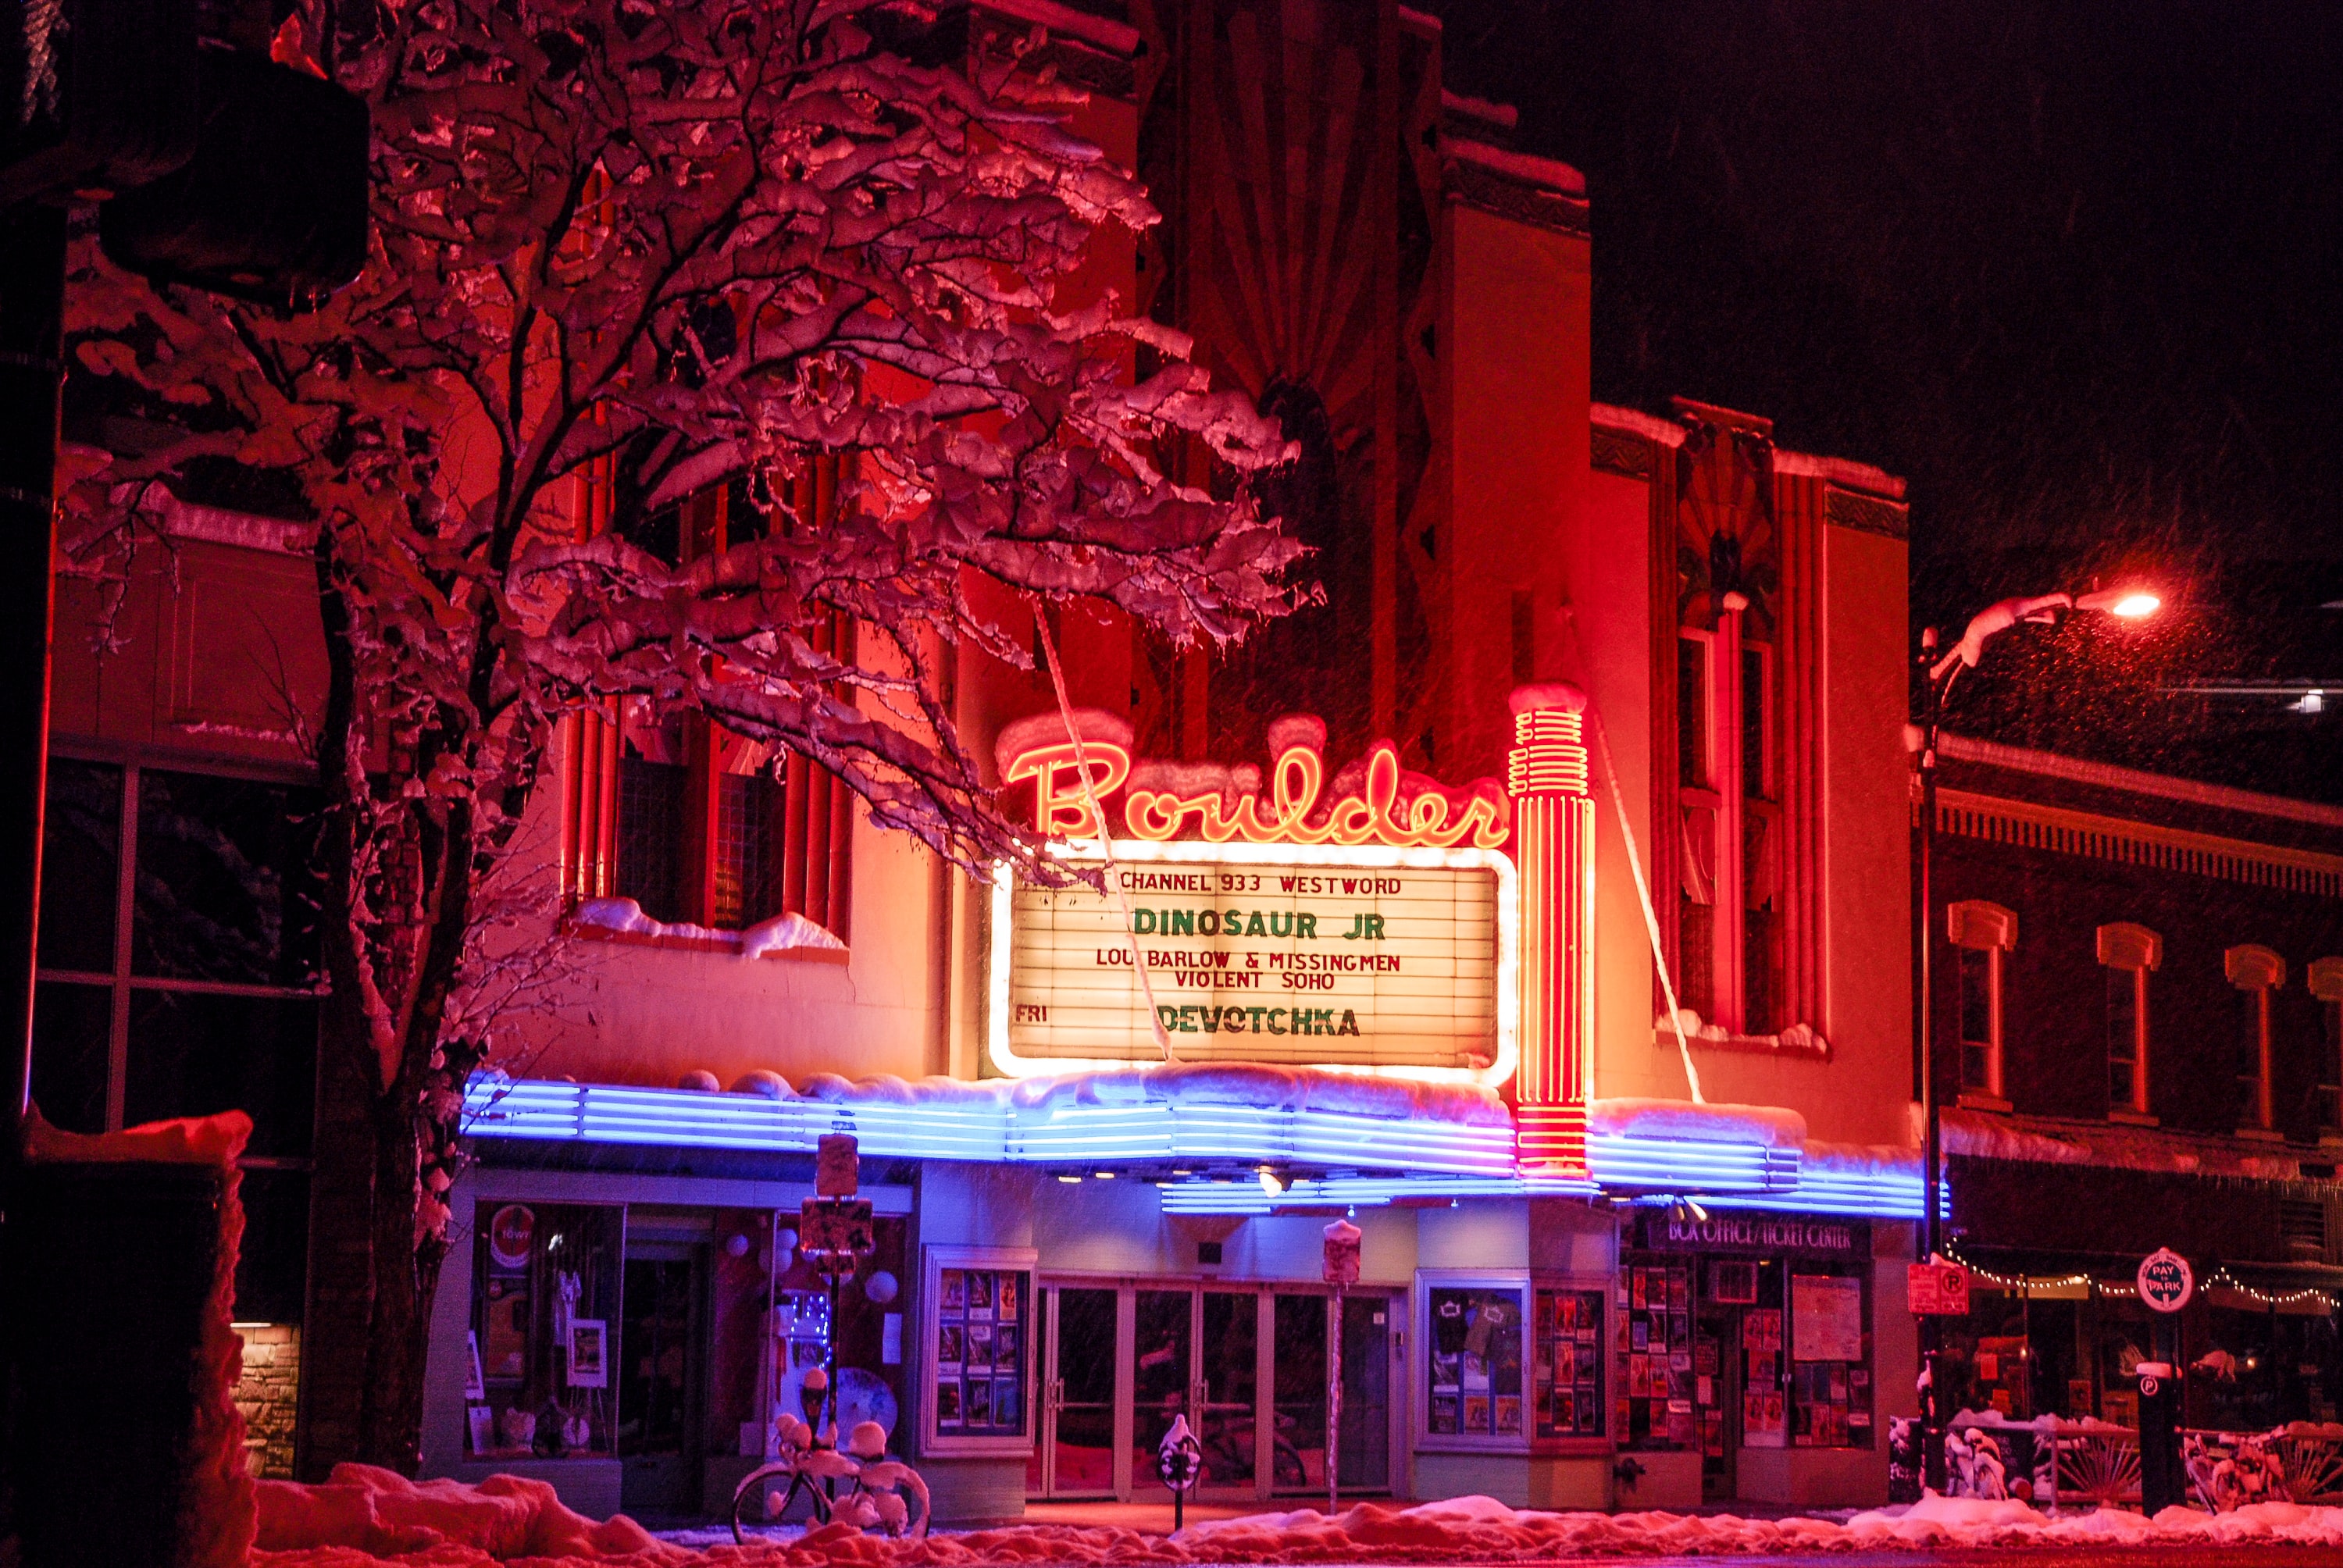 Movie theatre marquee on a winter night; image by Simon Goetz, via Unsplash.com.